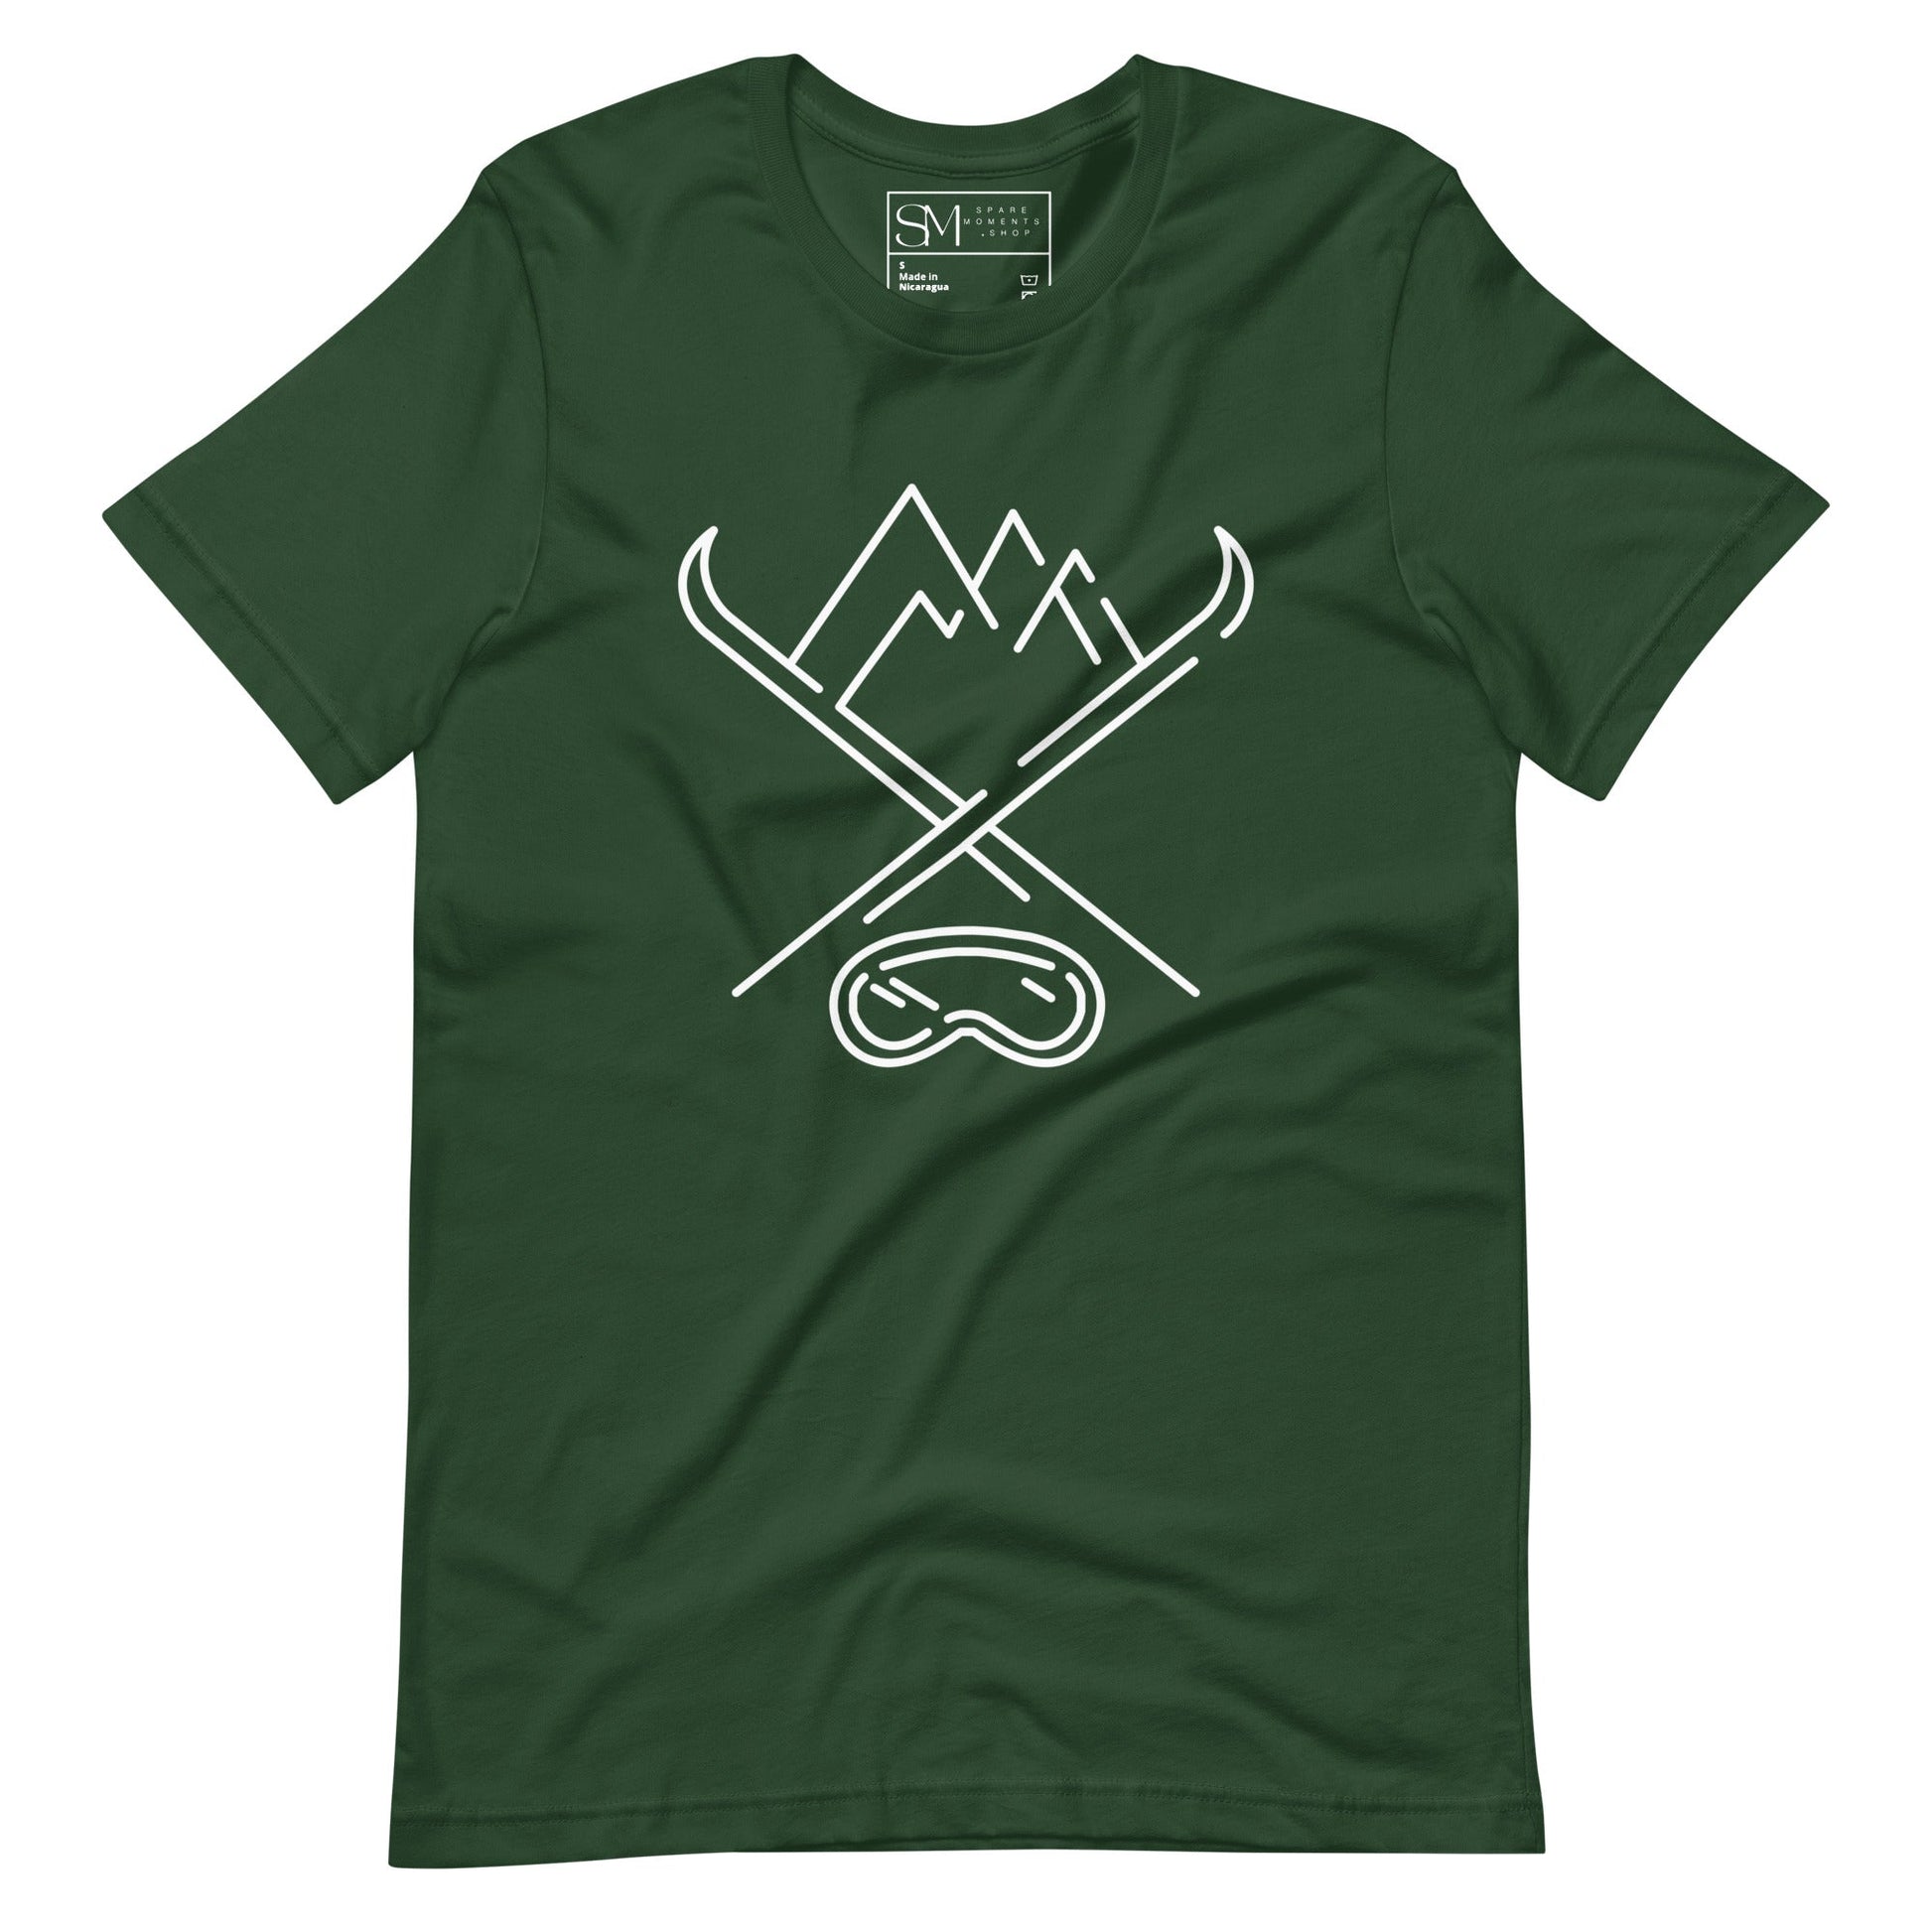 Shop Skiing Graphic Tee Shirts